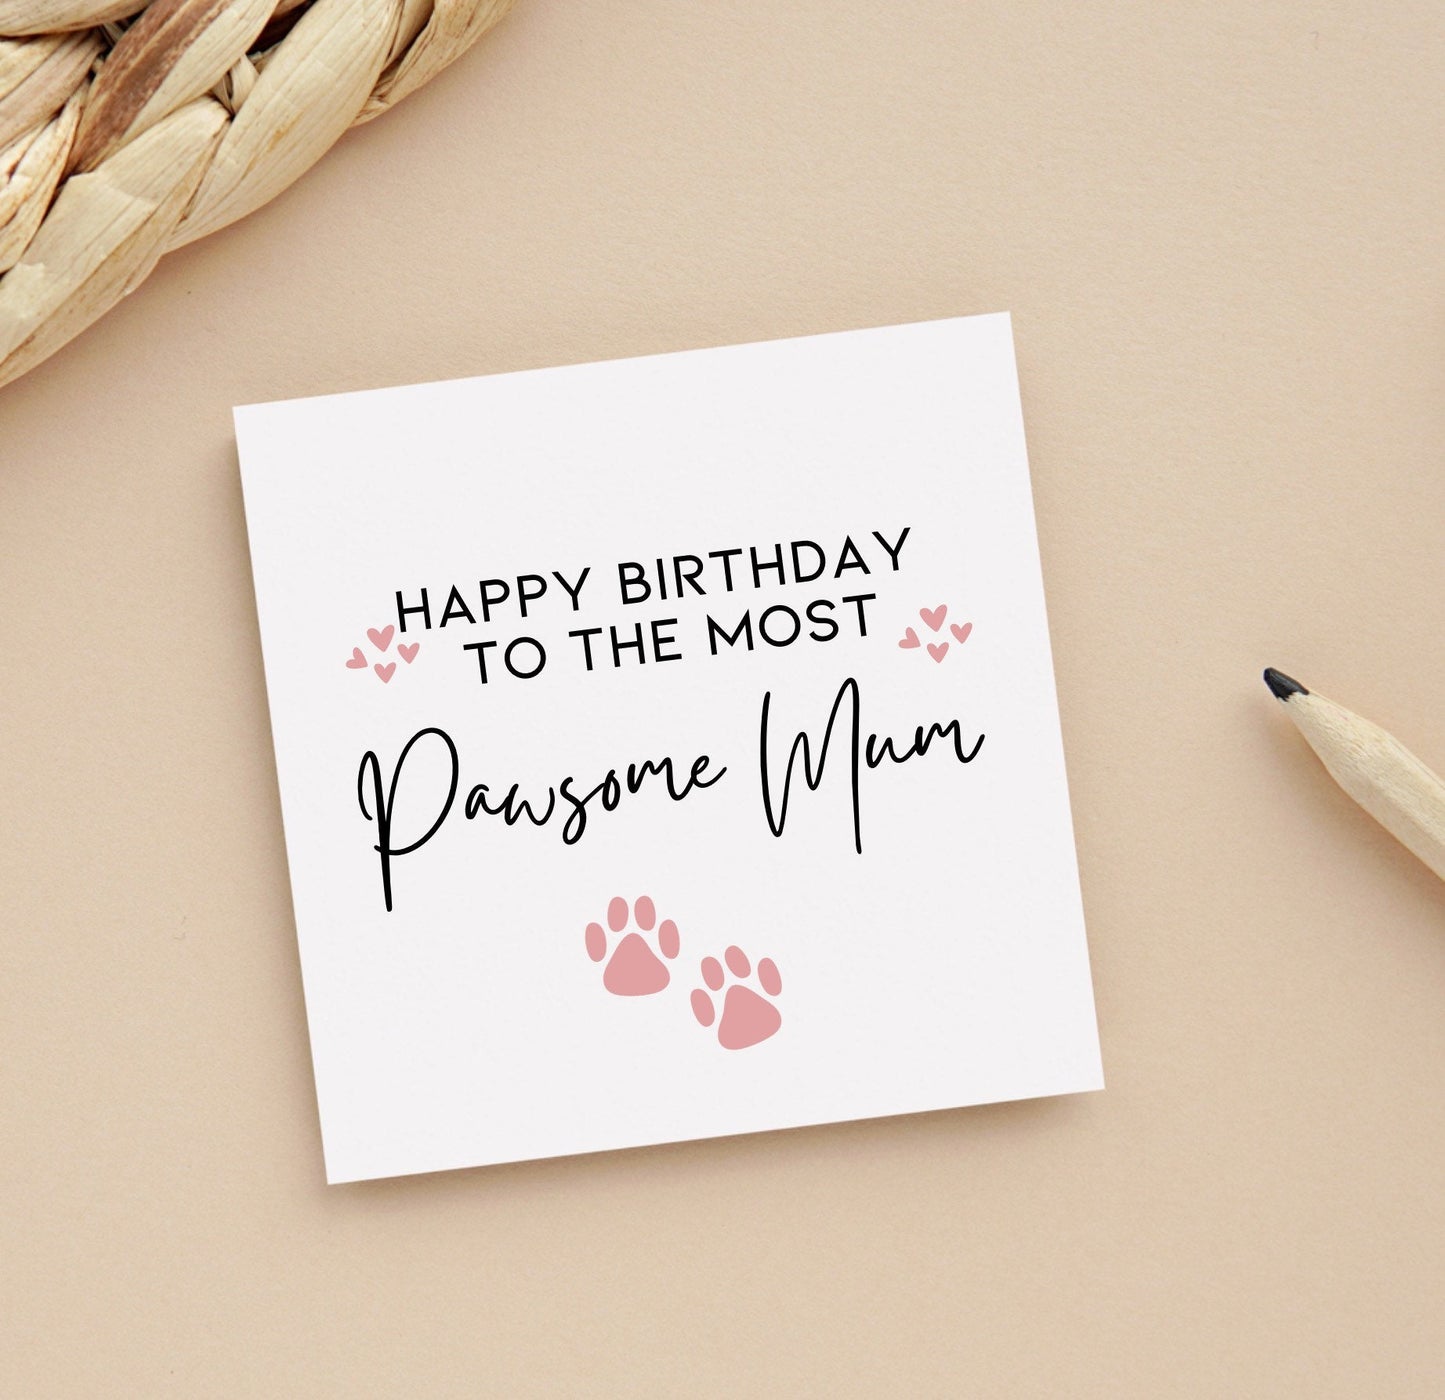 Happy birthday card, dog mum card, dog owner card, cards from pet dog, pawsome mum, pets, dog gifts, dog card, birthday